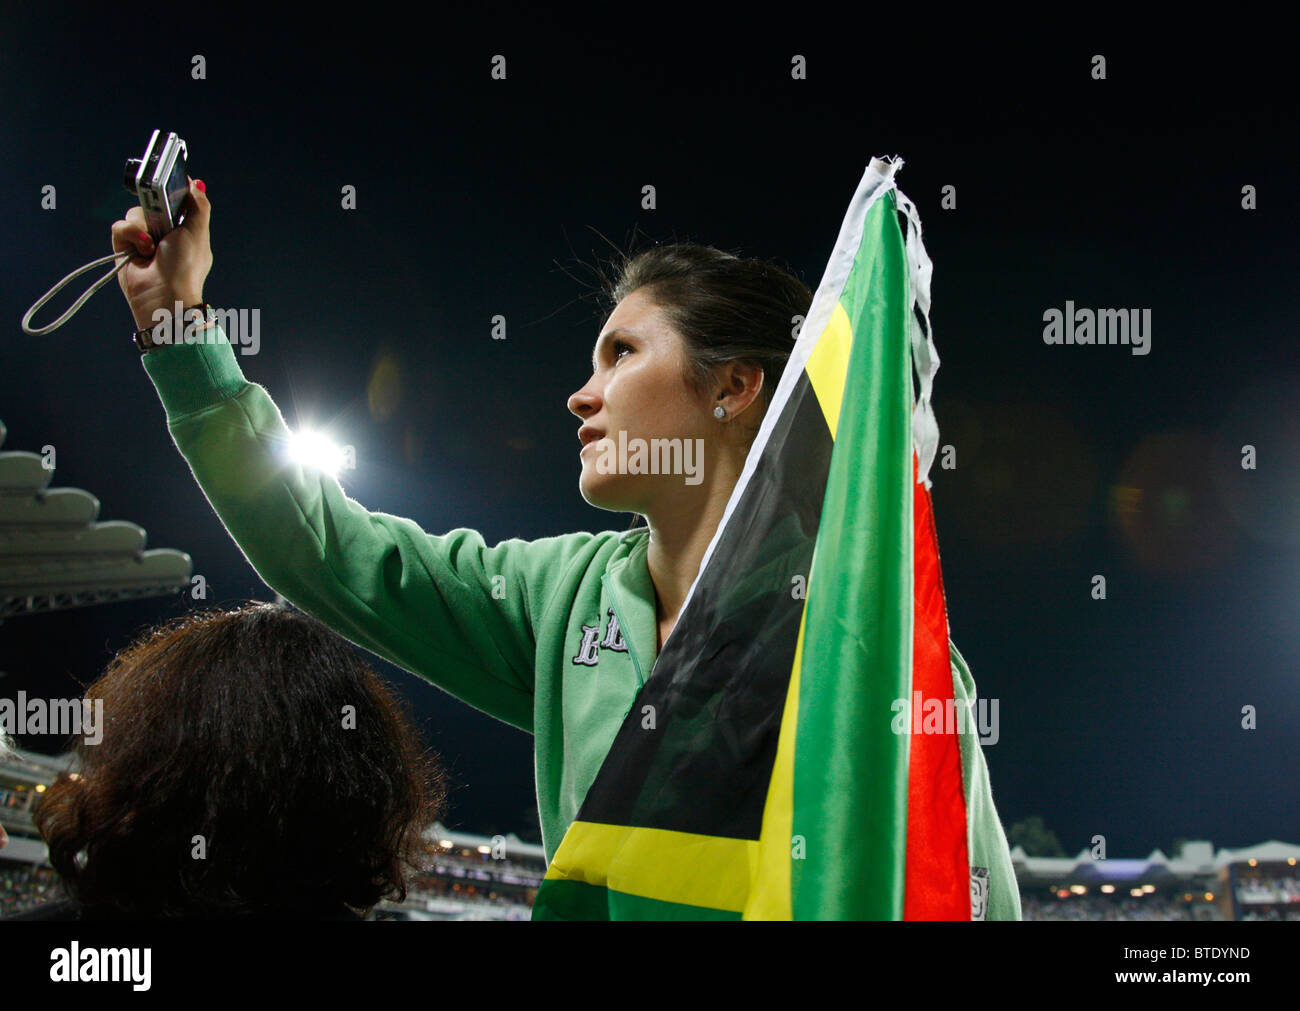 Cricket-Fan Fotografieren bei einem internationalen Pro20 Cricket-match Stockfoto